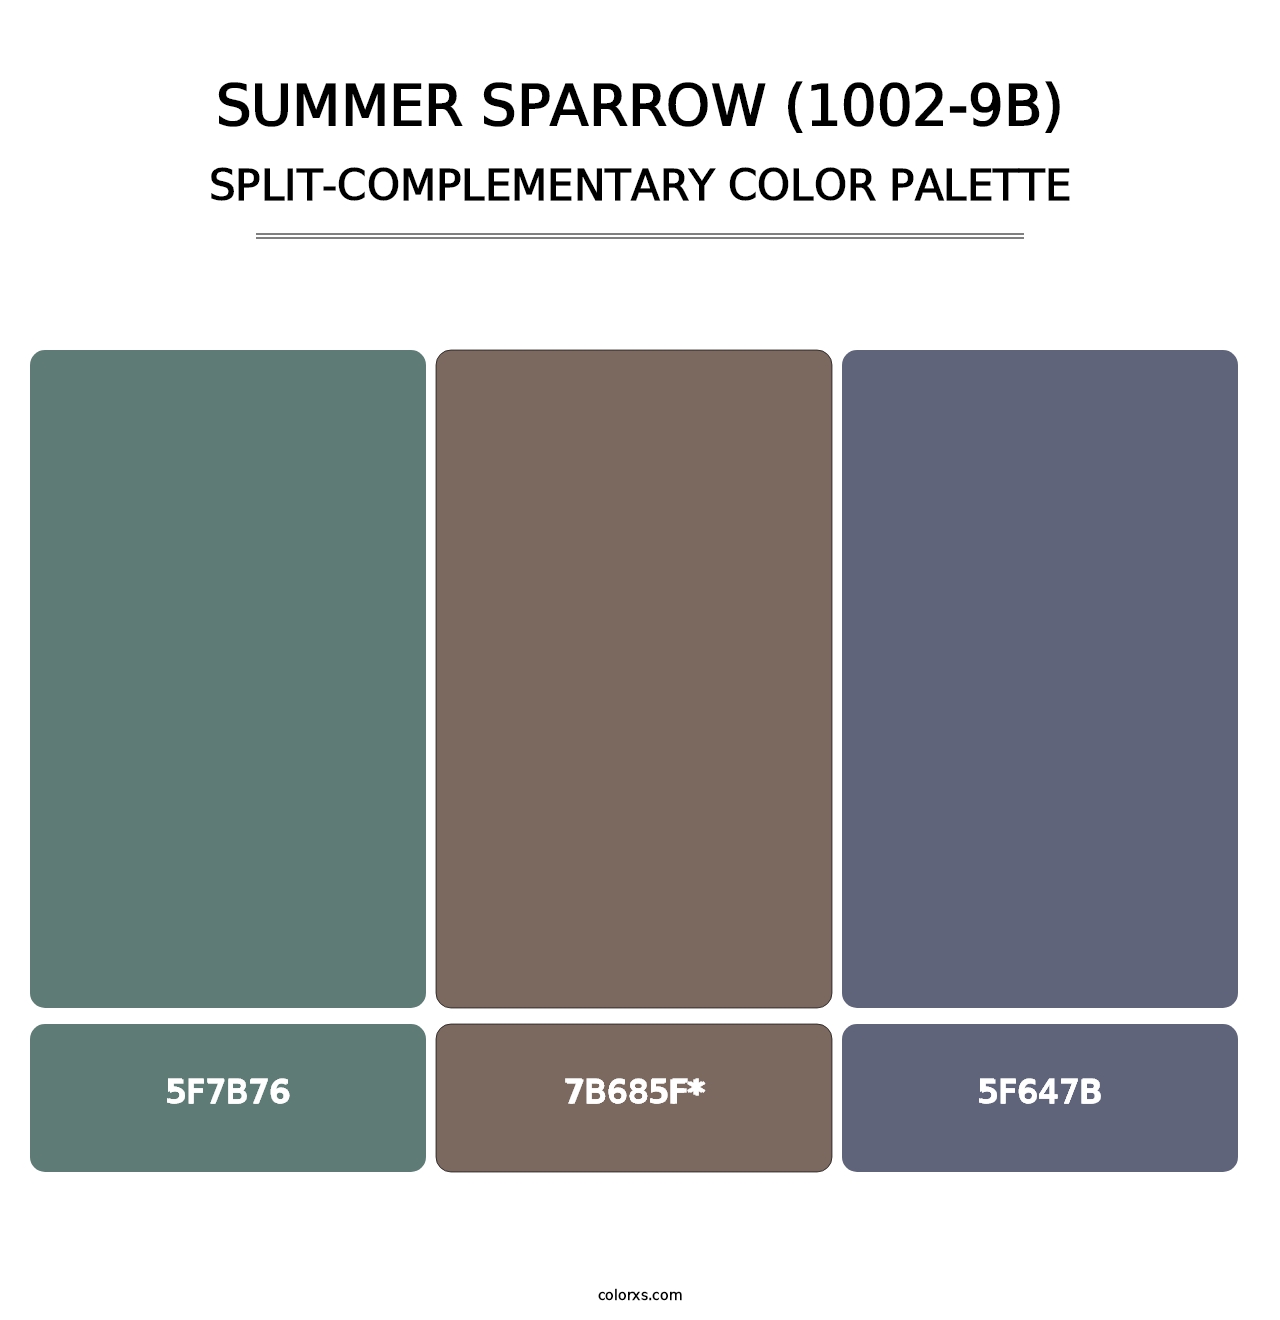 Summer Sparrow (1002-9B) - Split-Complementary Color Palette